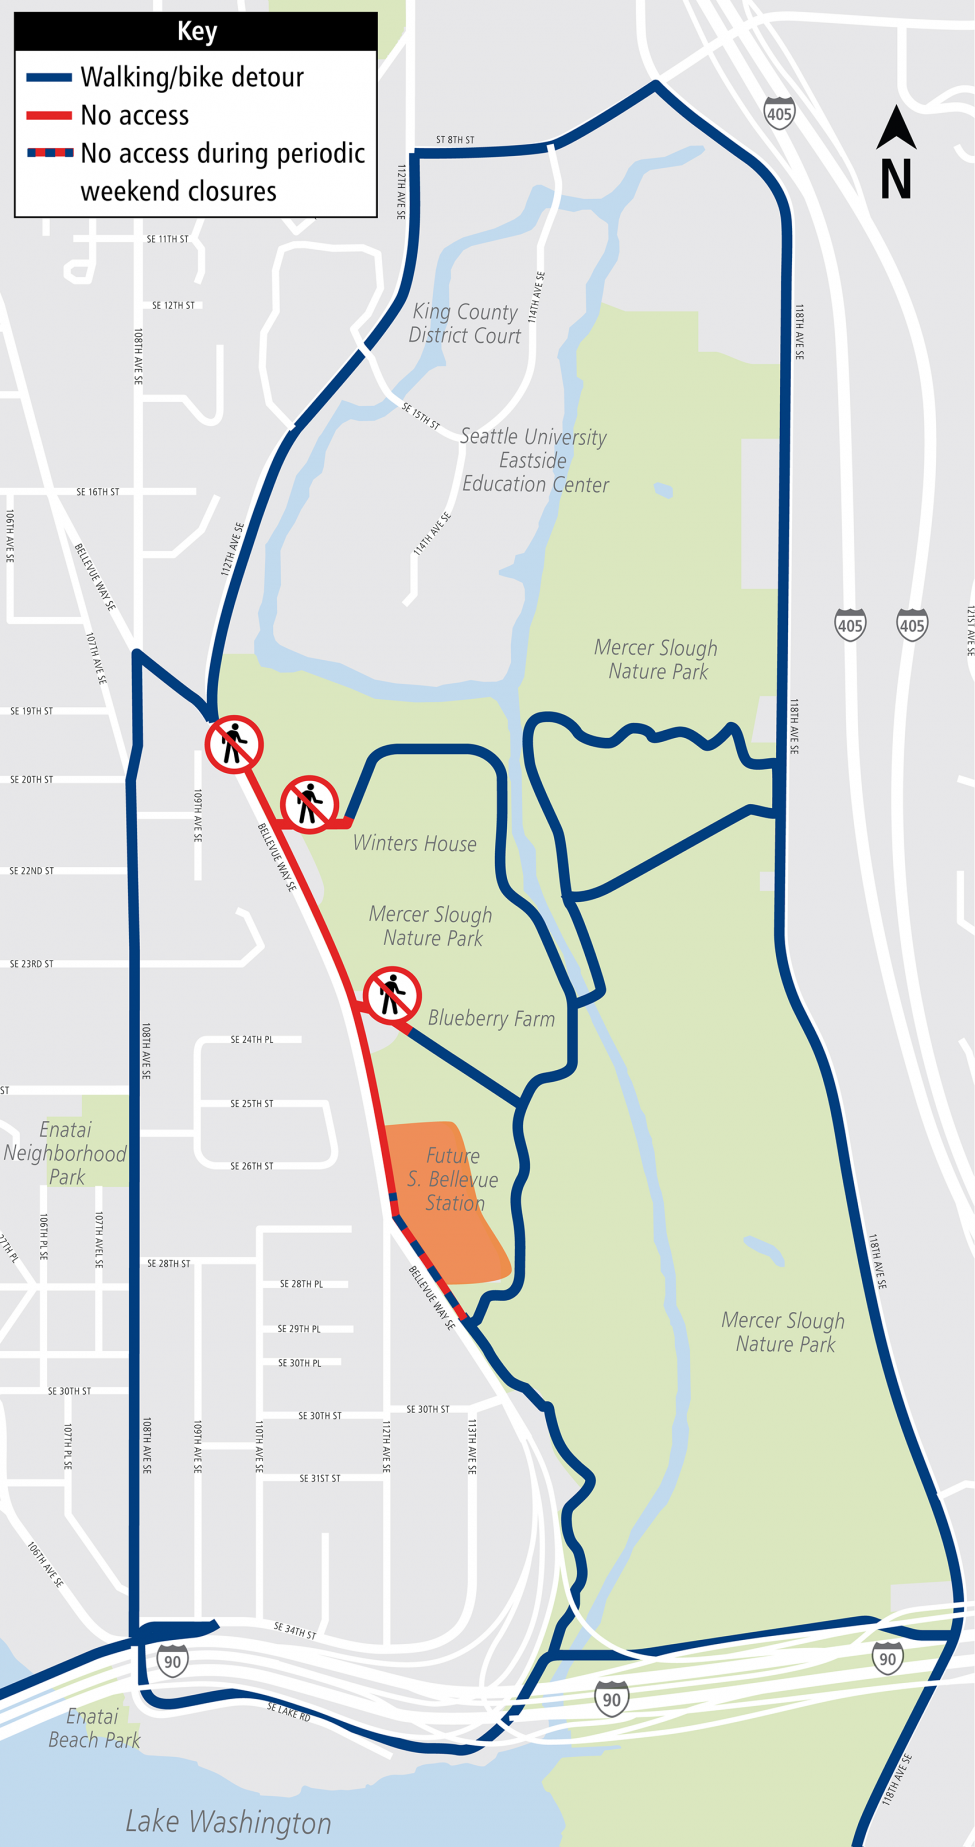 East Link Bellevue Way Southeast sidewalk closure pedestrian bike detour map